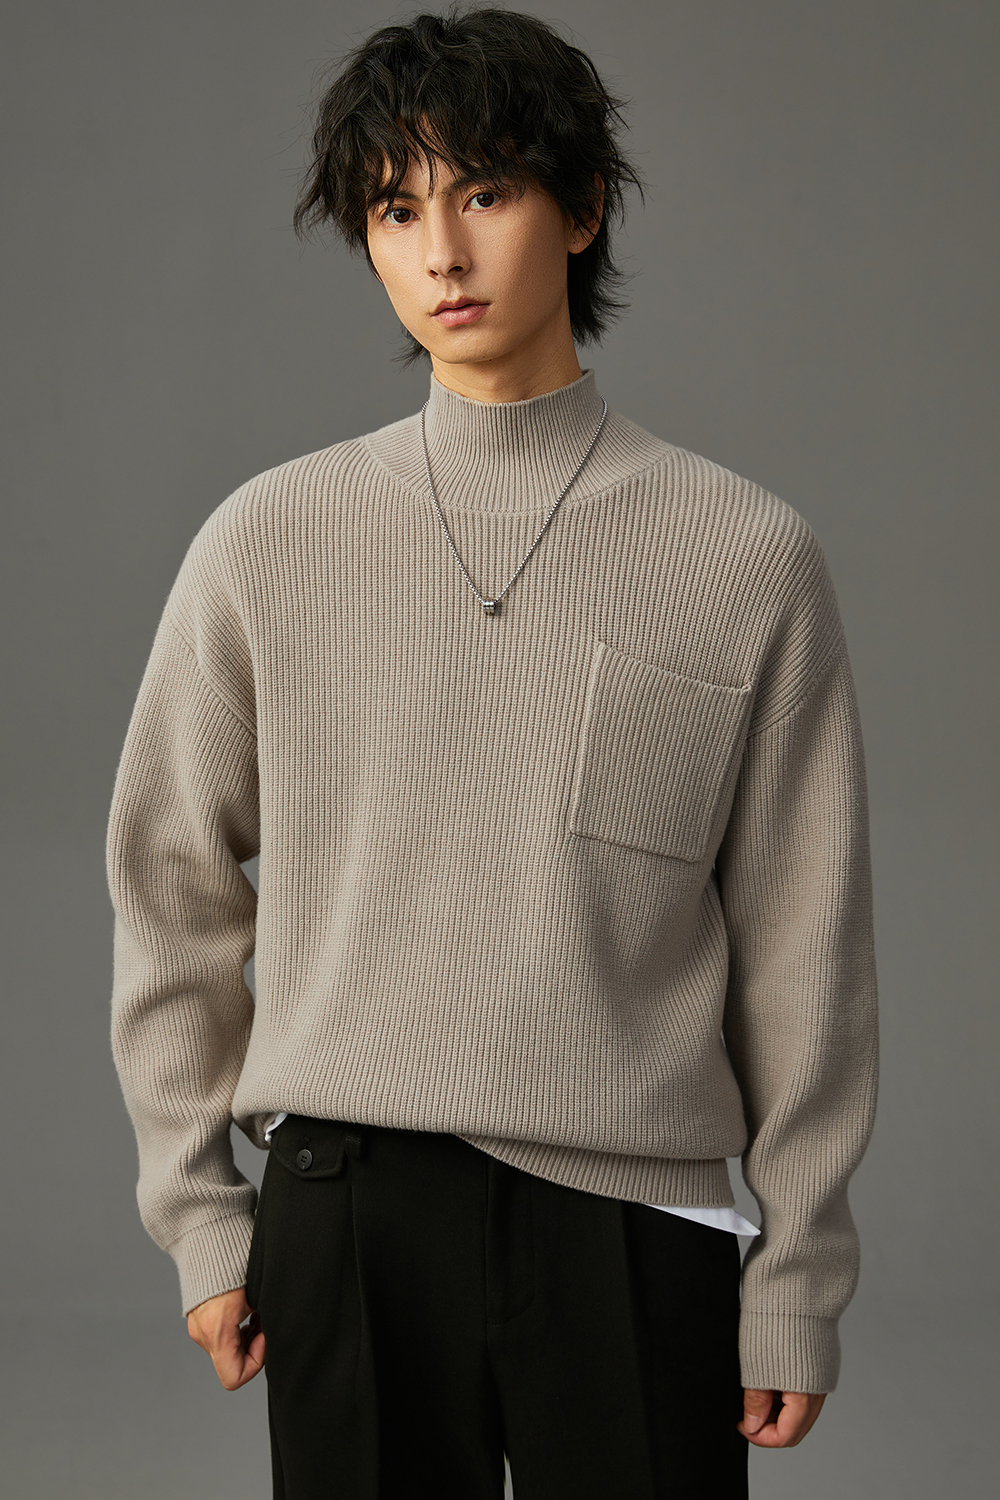 Designer Men's Sweater off white